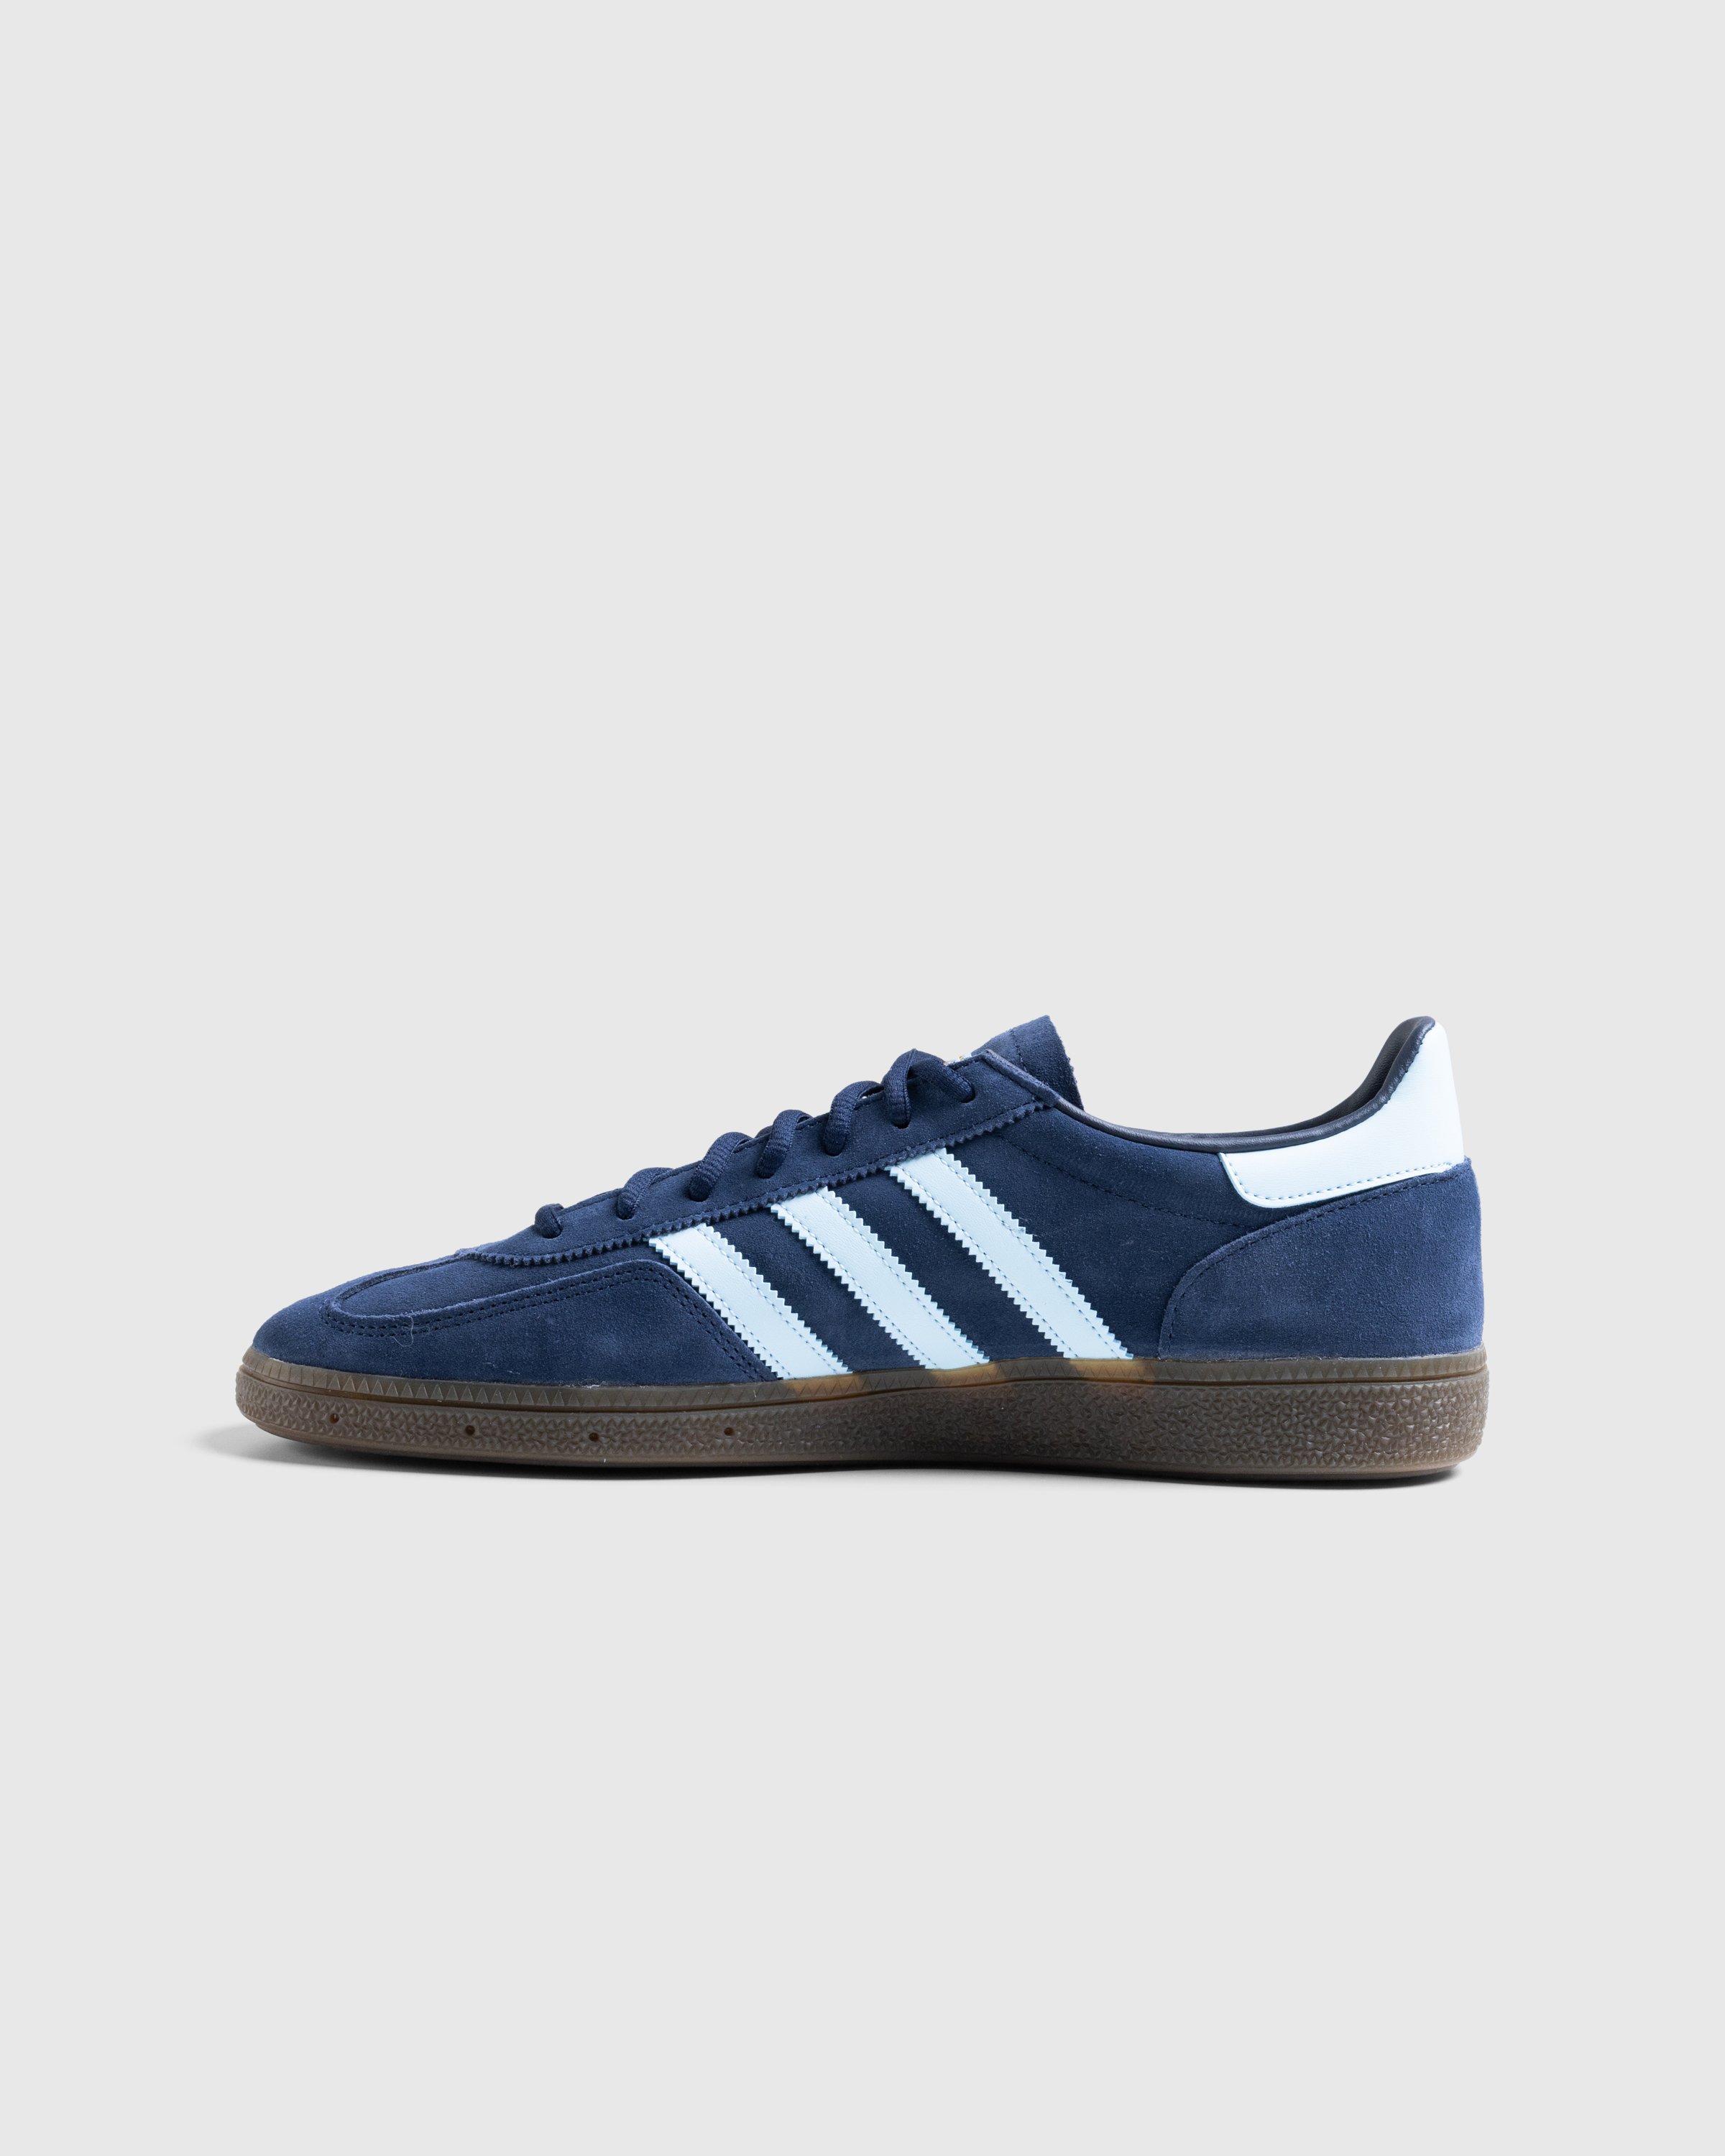 Adidas - Handball Spezial    Conavy/Clesky/Gum5 - Footwear - Blue - Image 2